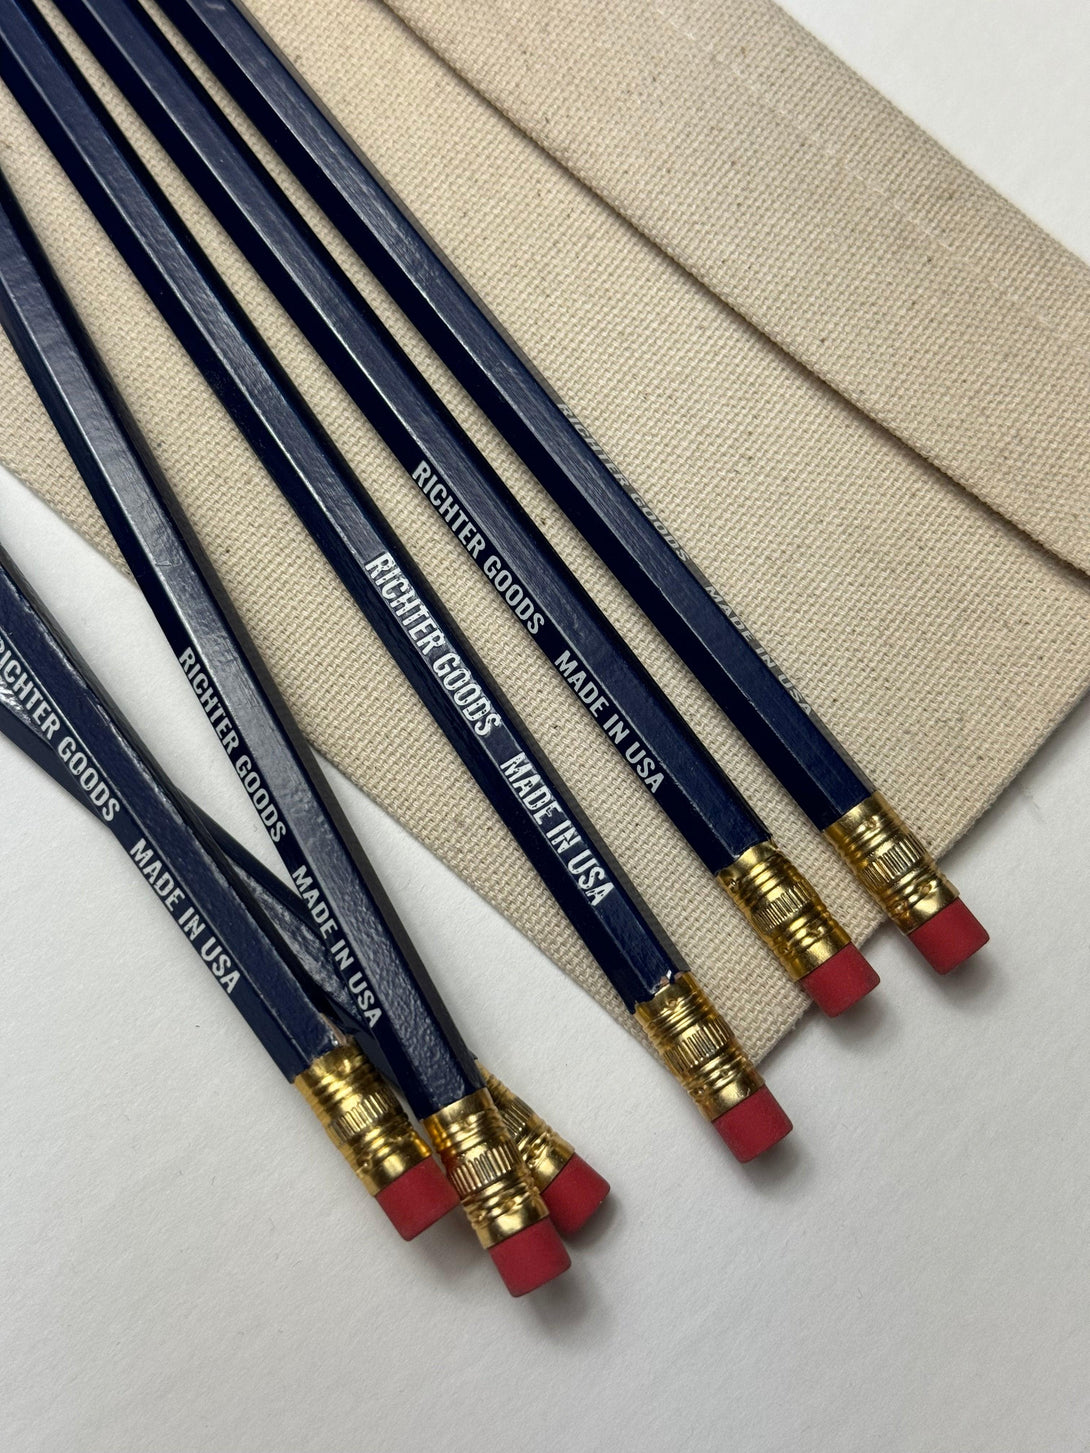 Duck Canvas Pencil Bag with Six Pencils - Richter Goods